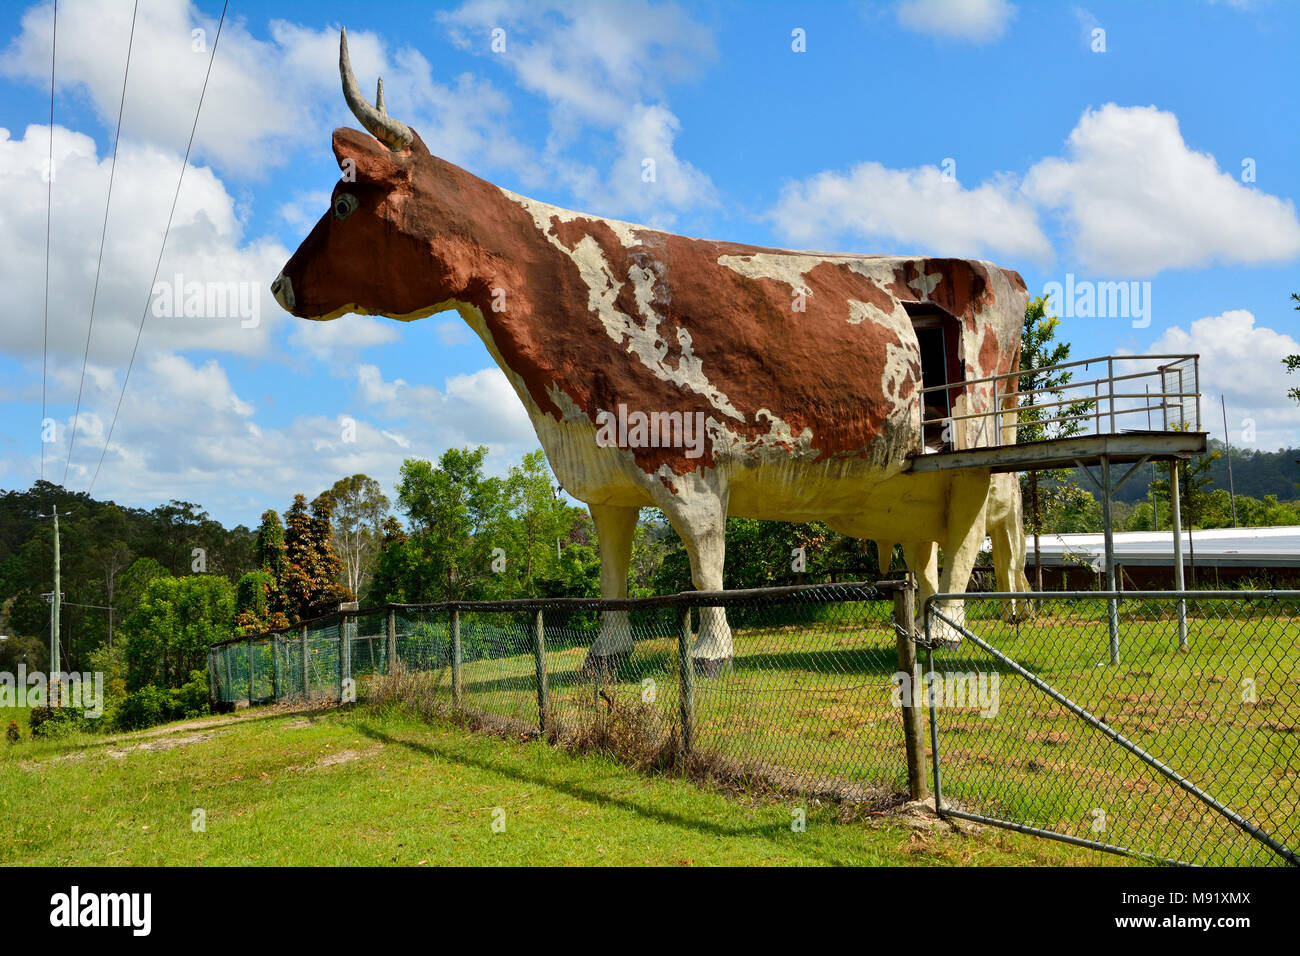 Koolangur, Queensland, Australien - 17. Dezember 2017. Große Kuh Struktur in Koolangur, hinter dem Zaun, mit Vegetation. Stockfoto